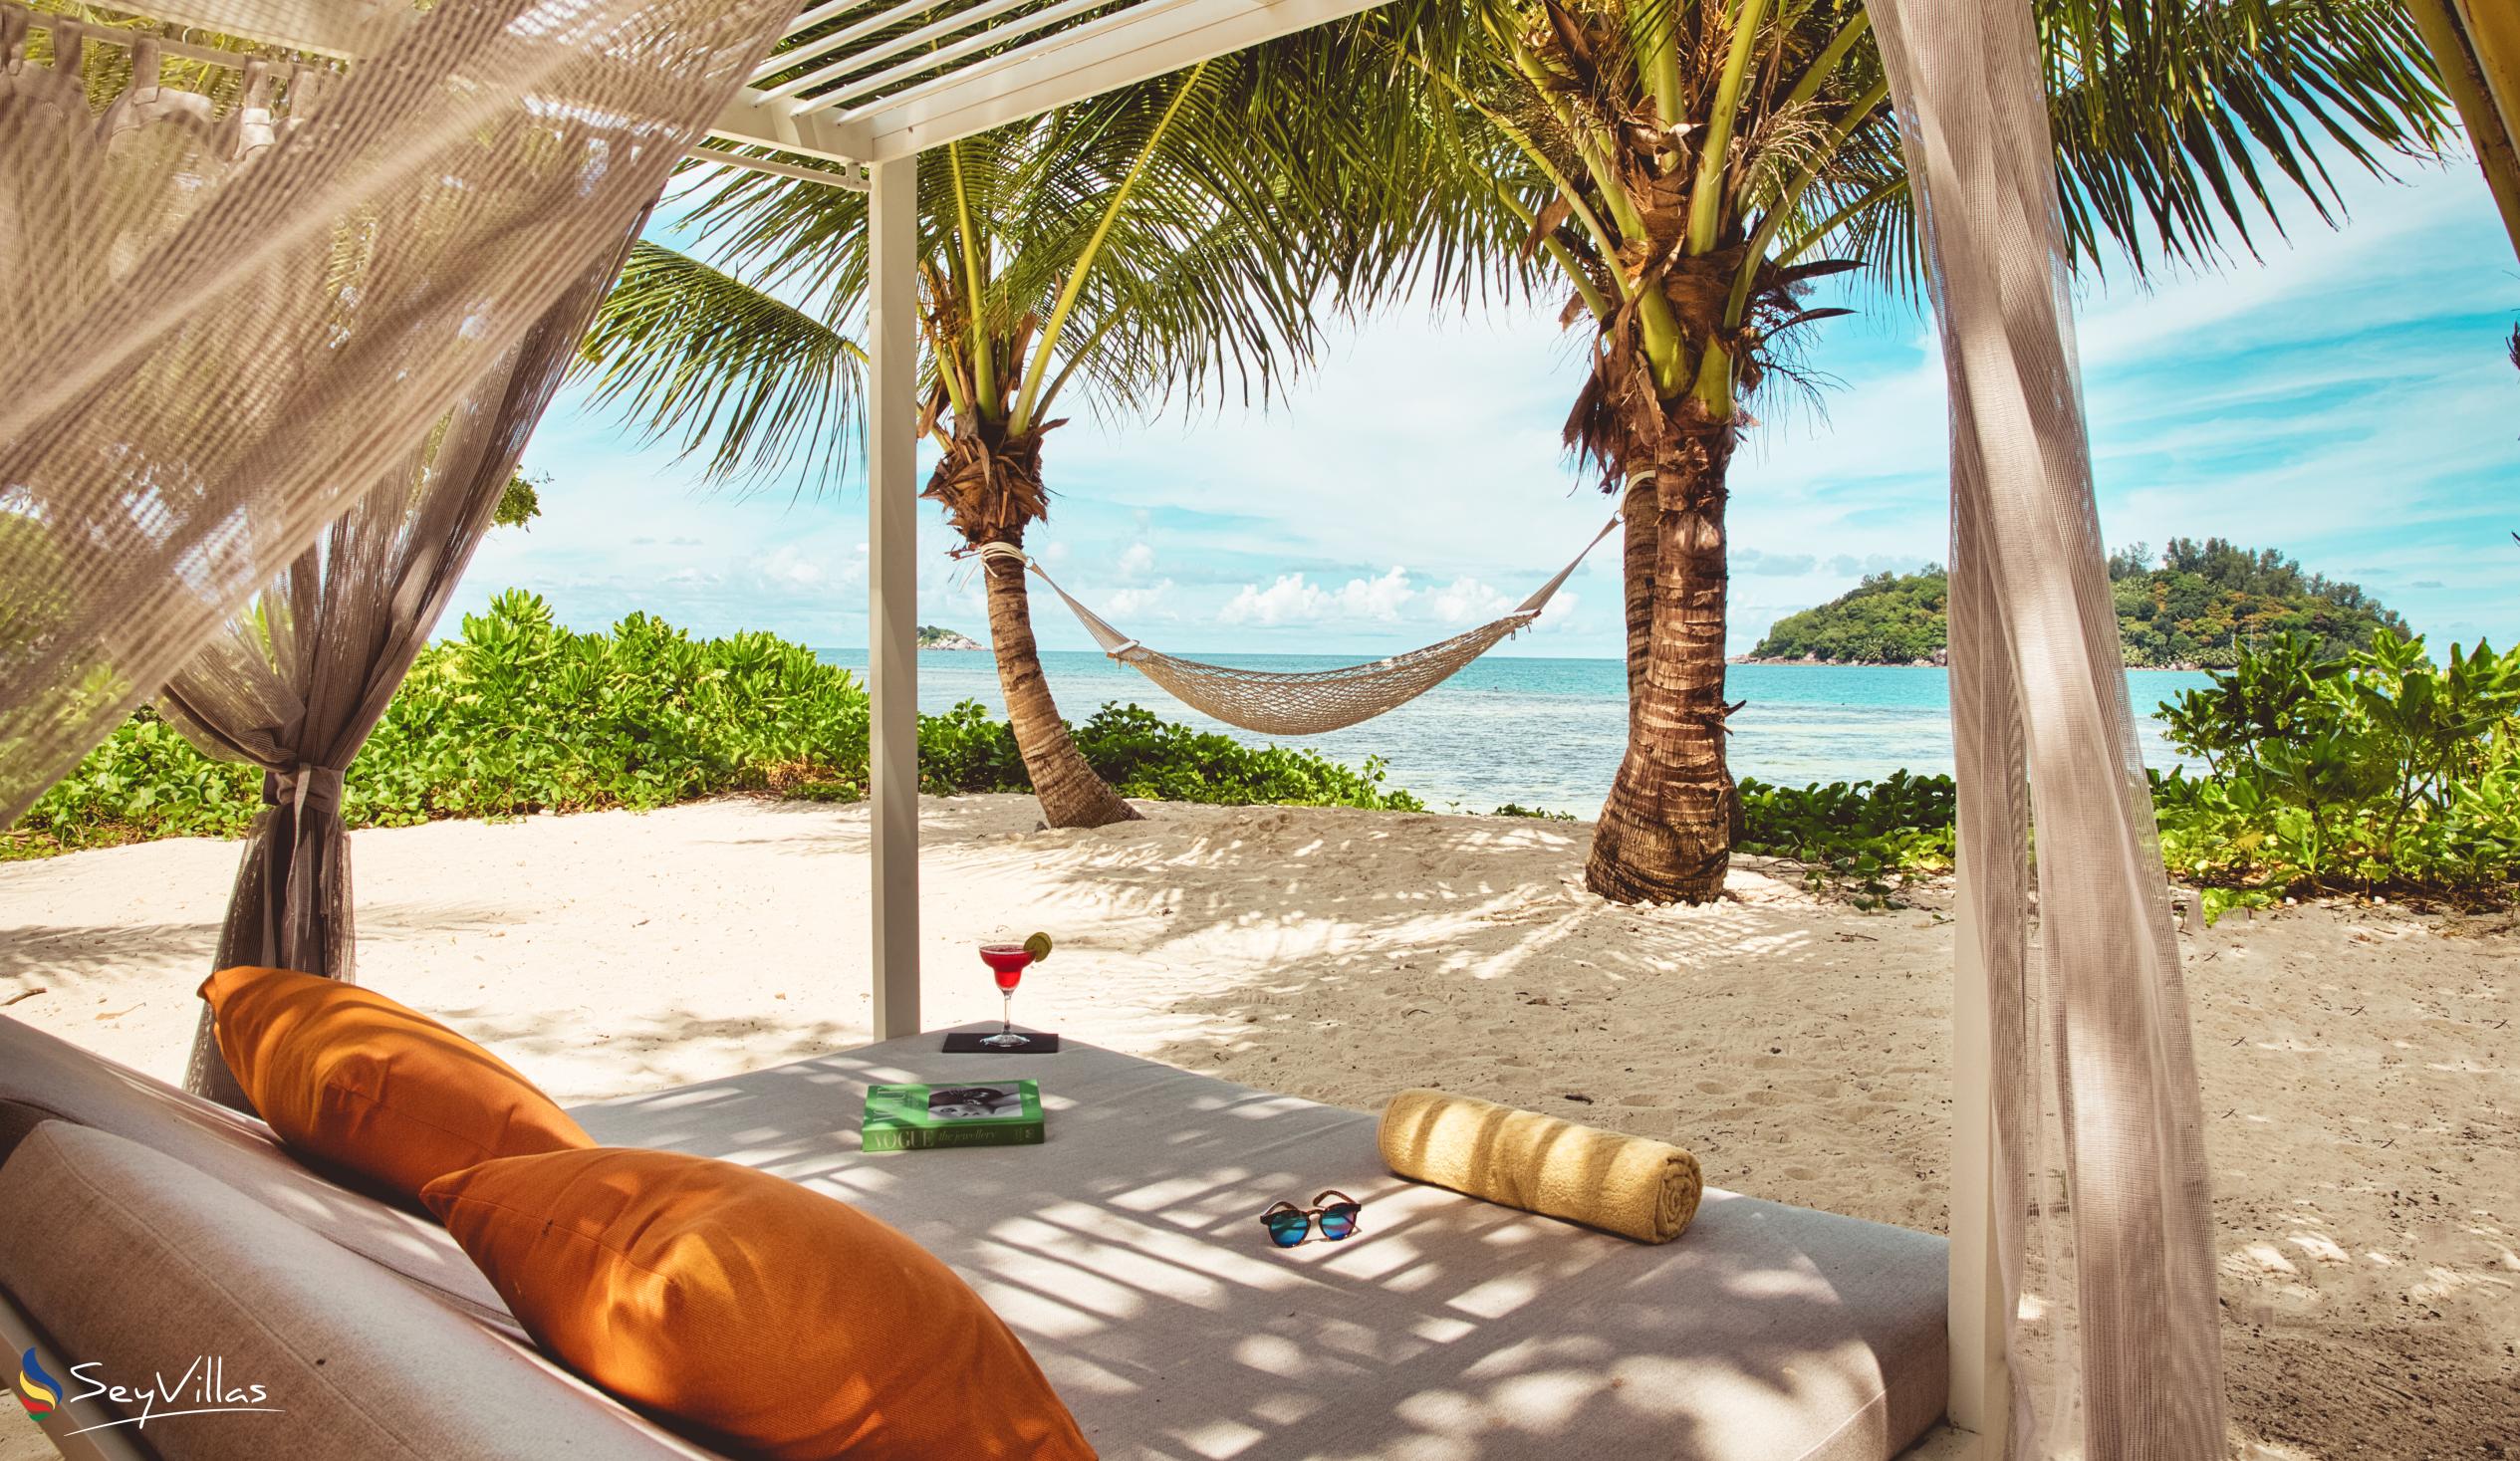 Foto 38: Club Med Seychelles - Location - Saint Anne (Seychelles)